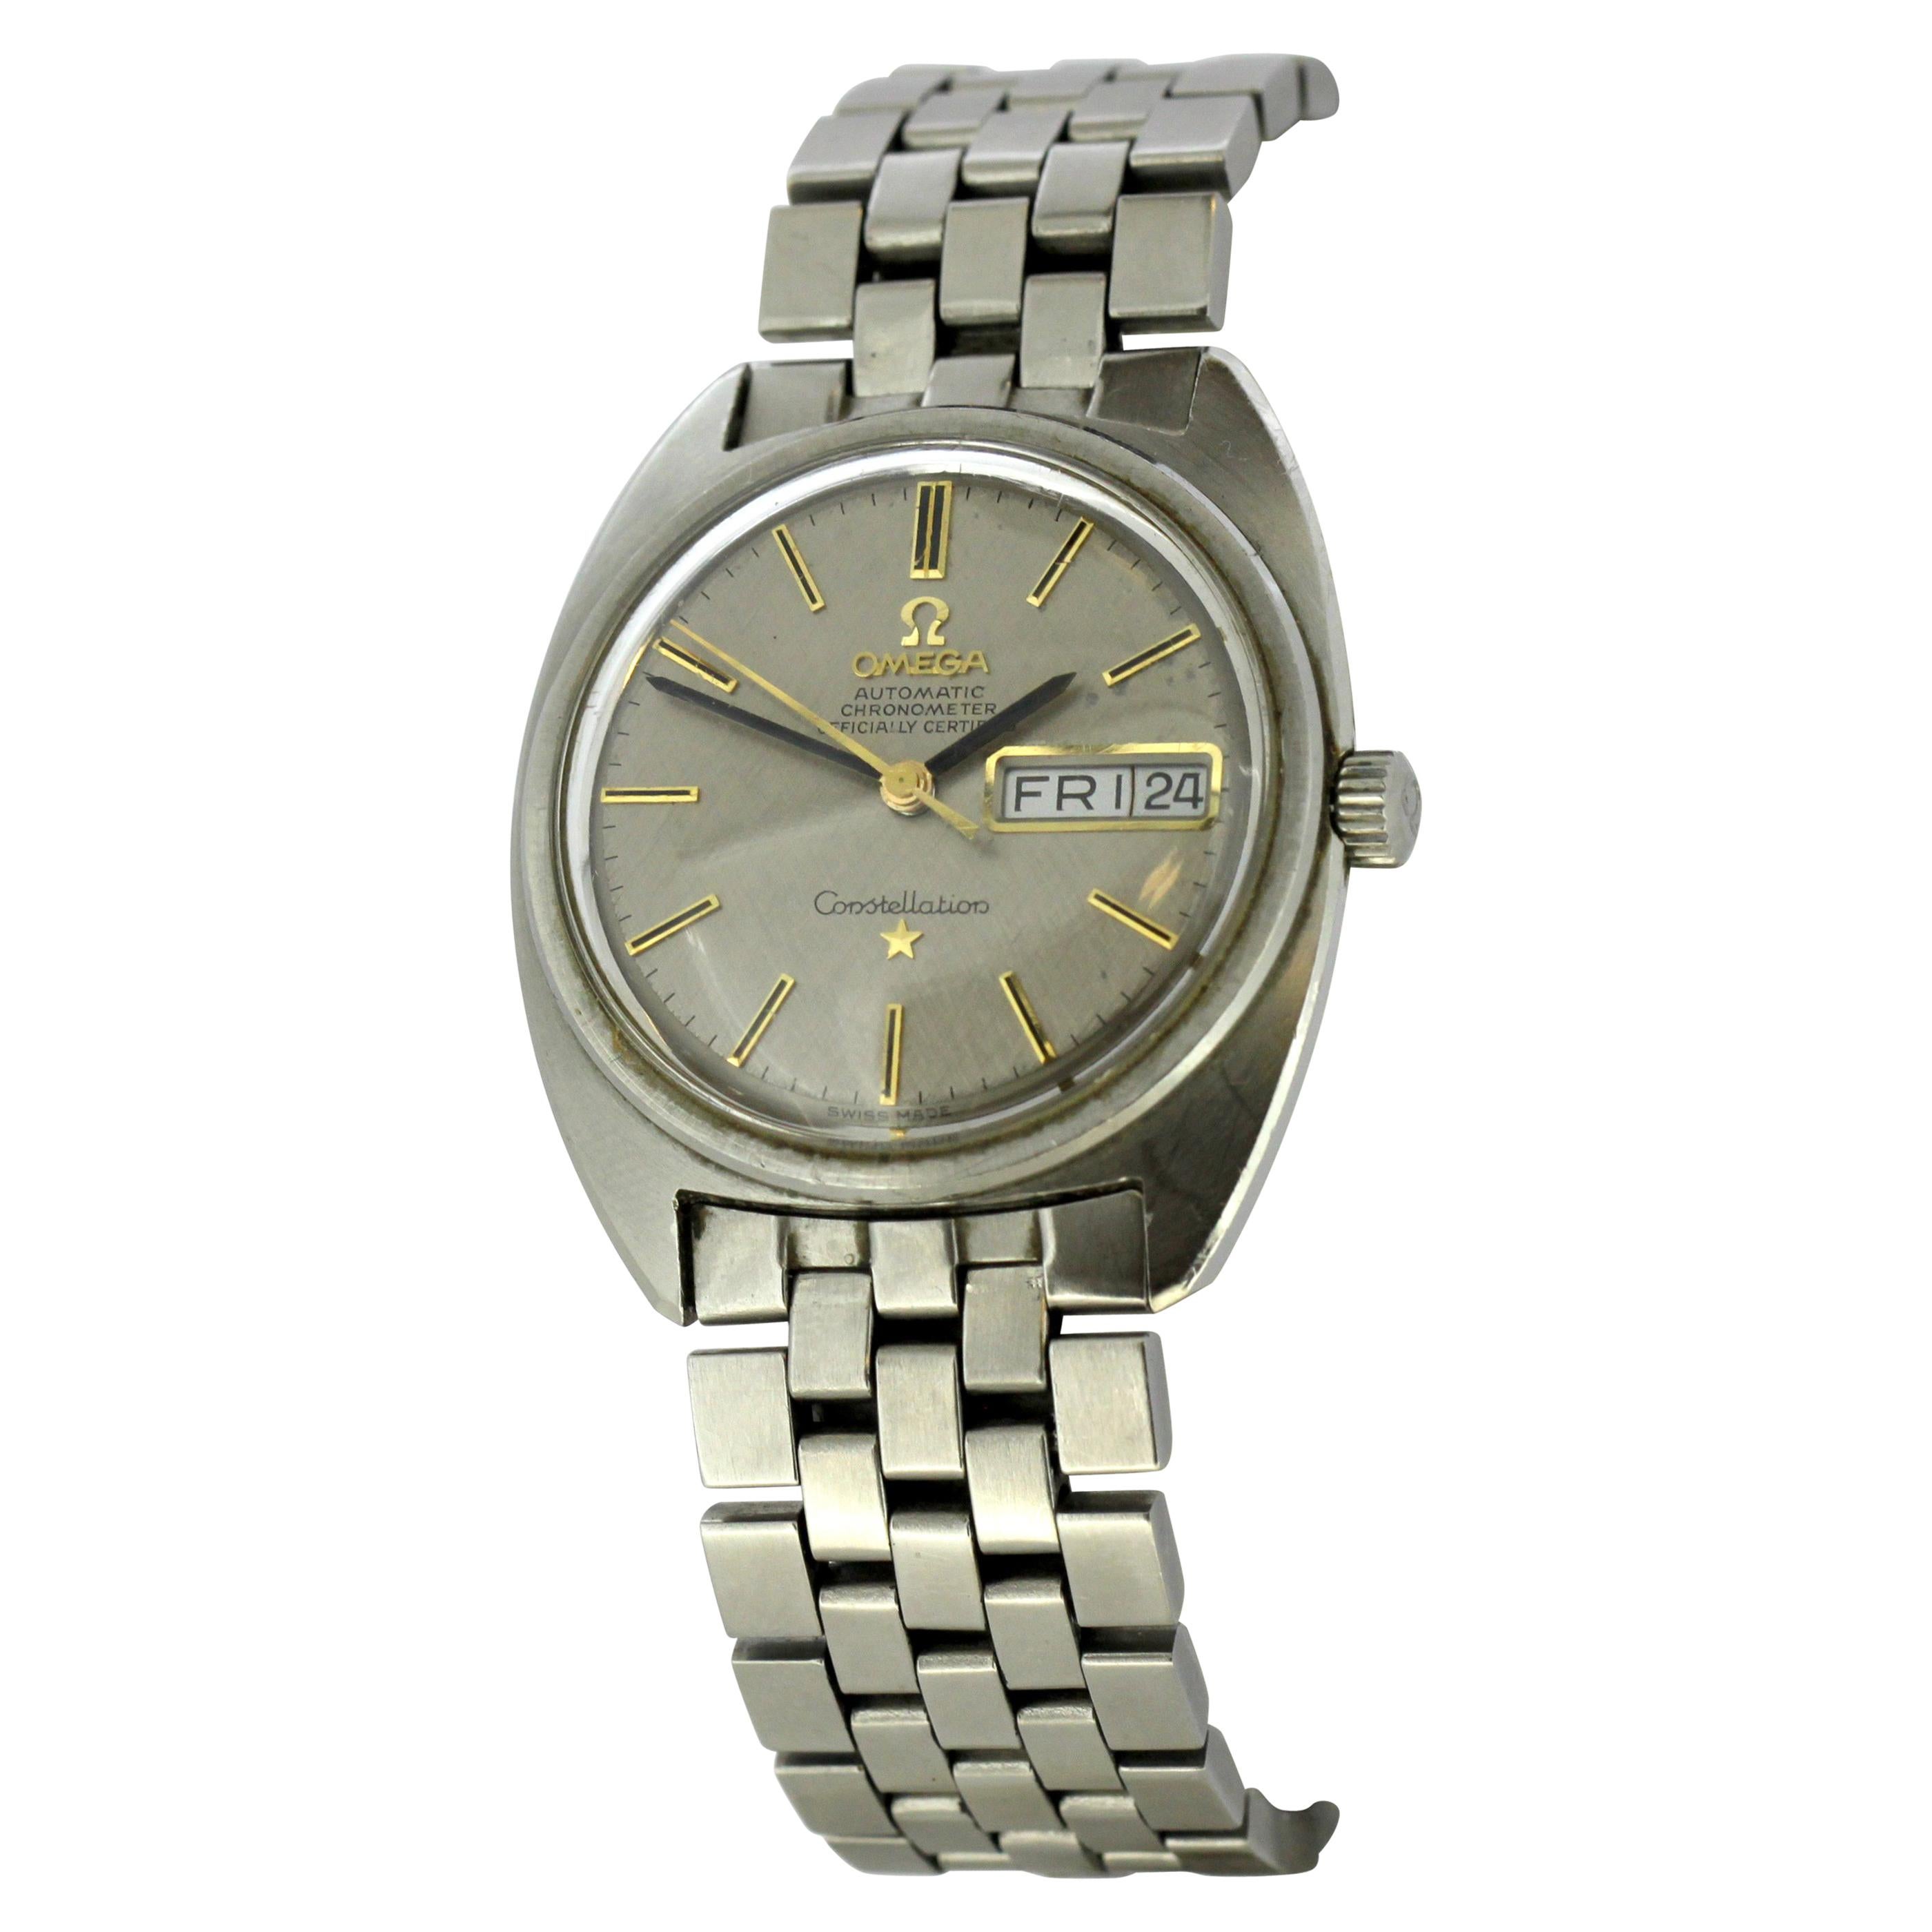 Omega Constellation, Vintage Automatic Chronometer Wristwatch